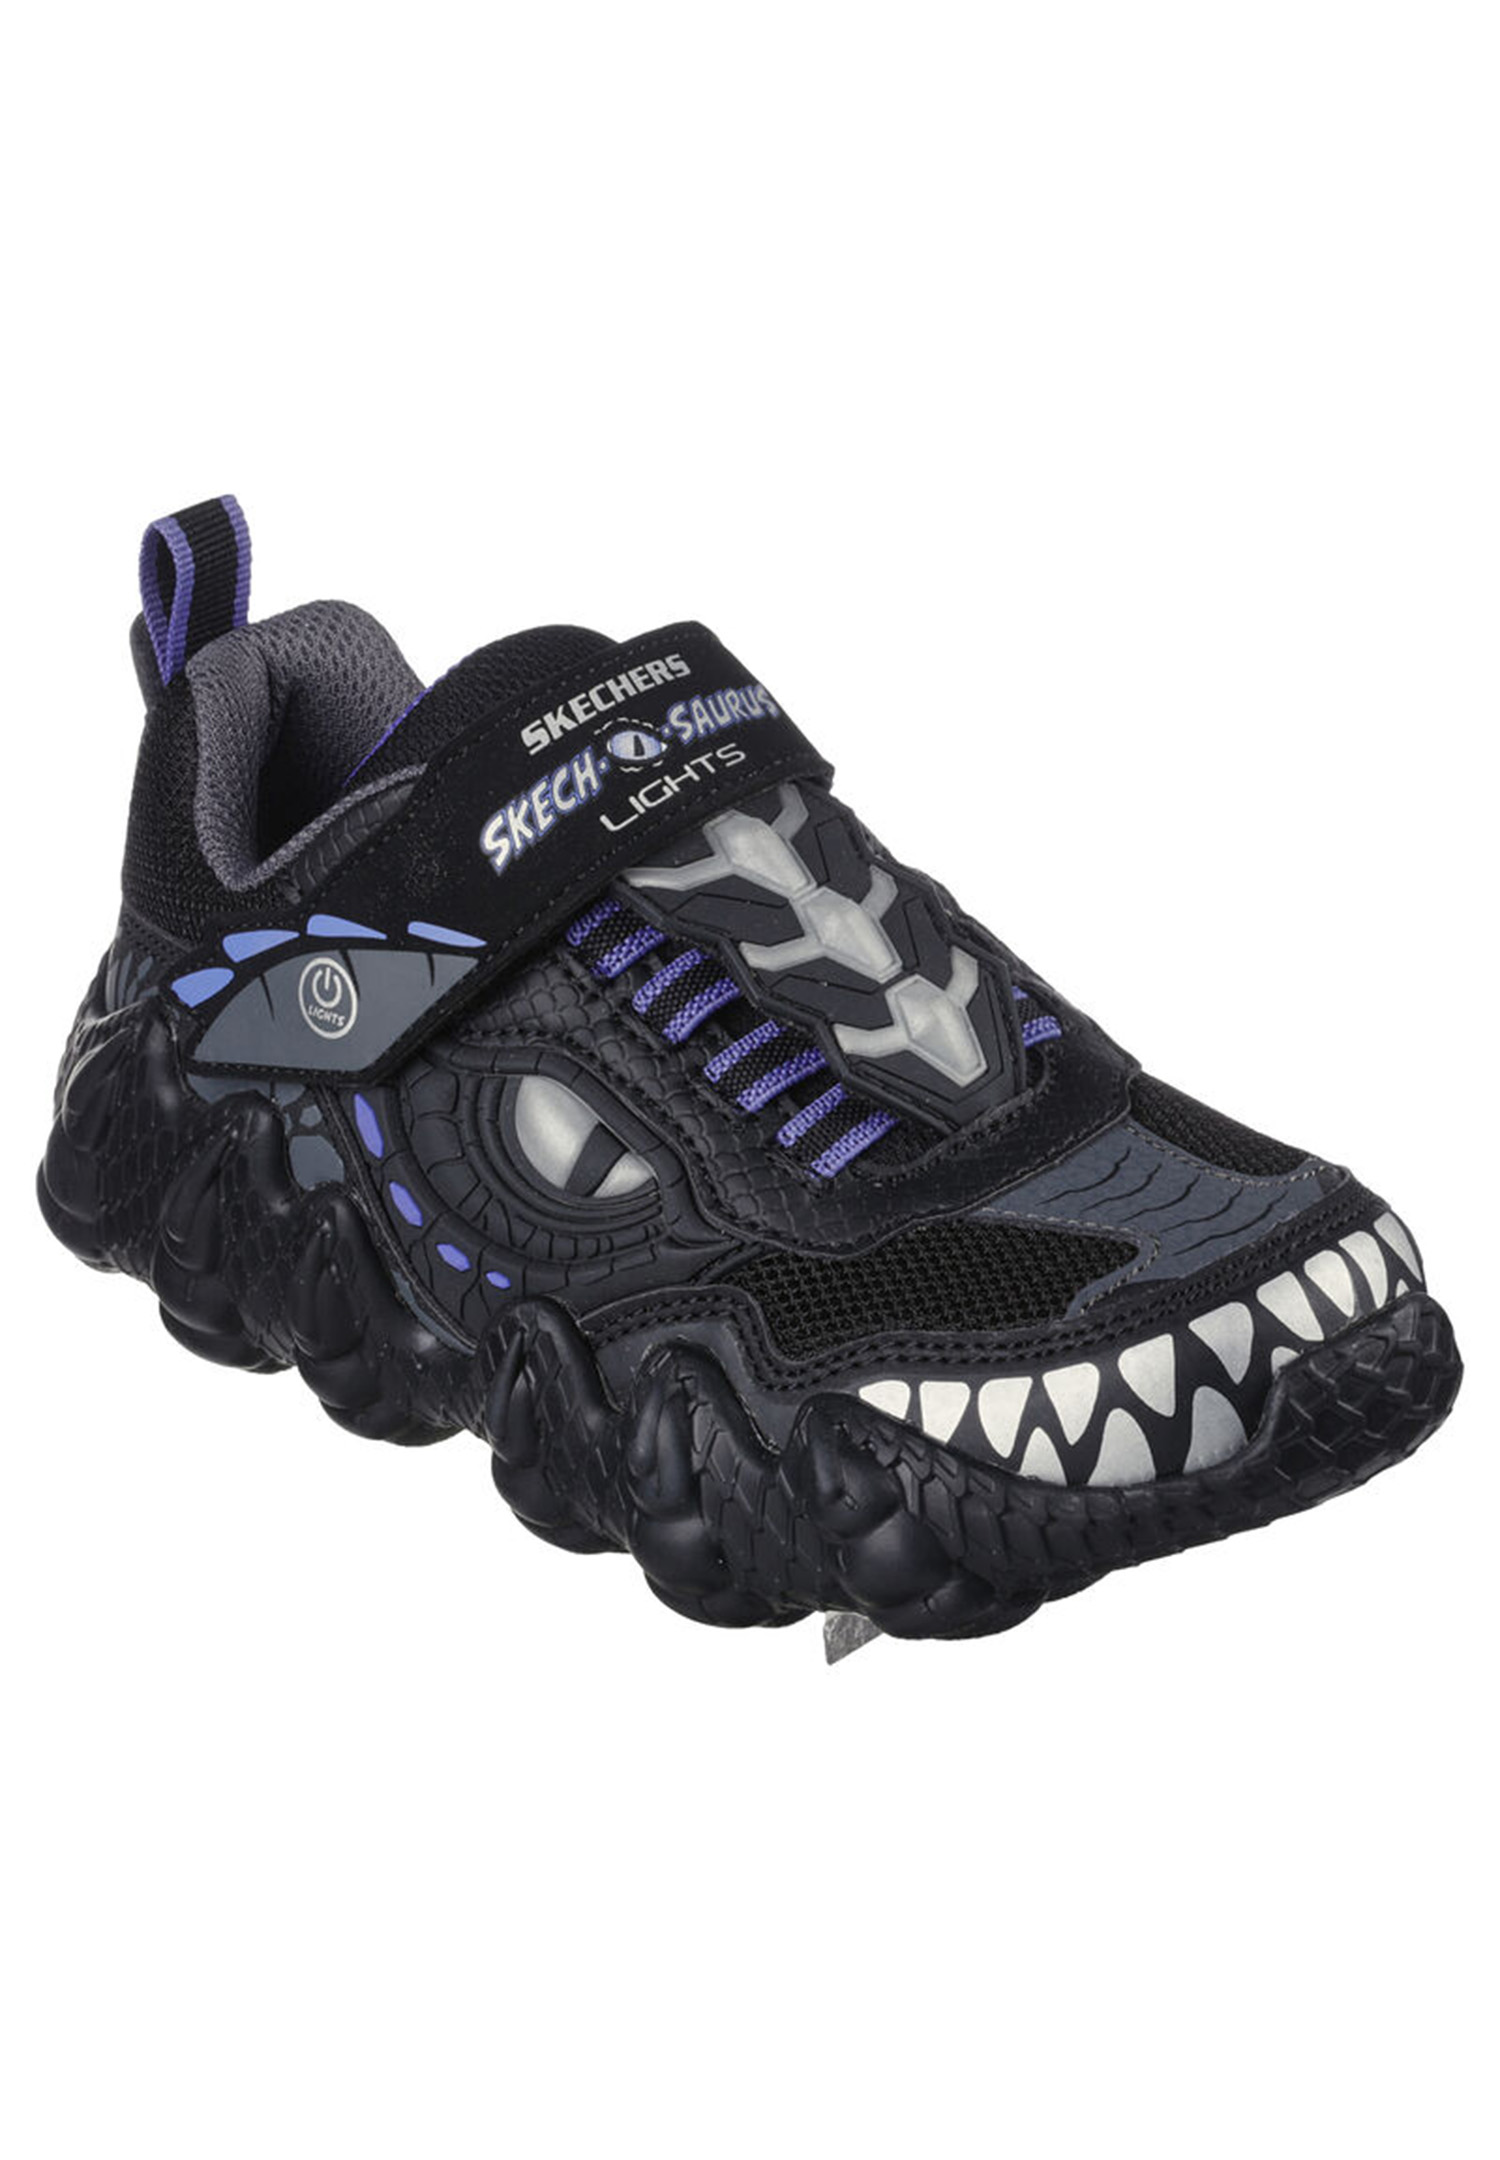 Skechers SKECH-O-SAURUS Dino-Tracker Kinder Jungen Sneakers 400112L schwarz